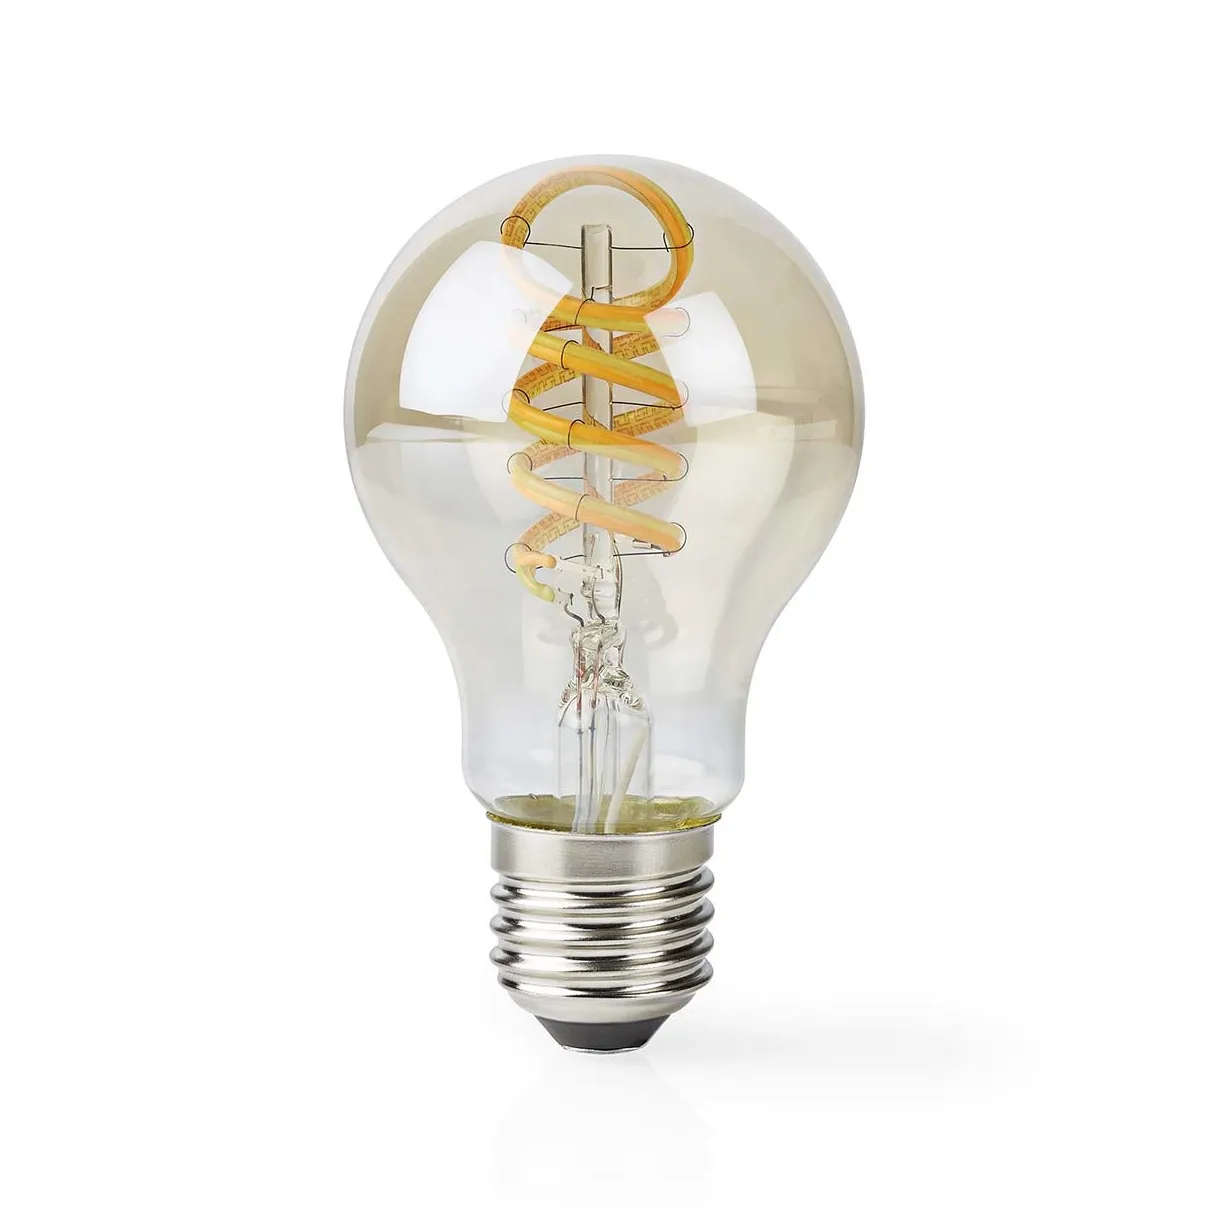 Nedis SmartLife LED Filamentlamp | Wi-Fi | E27